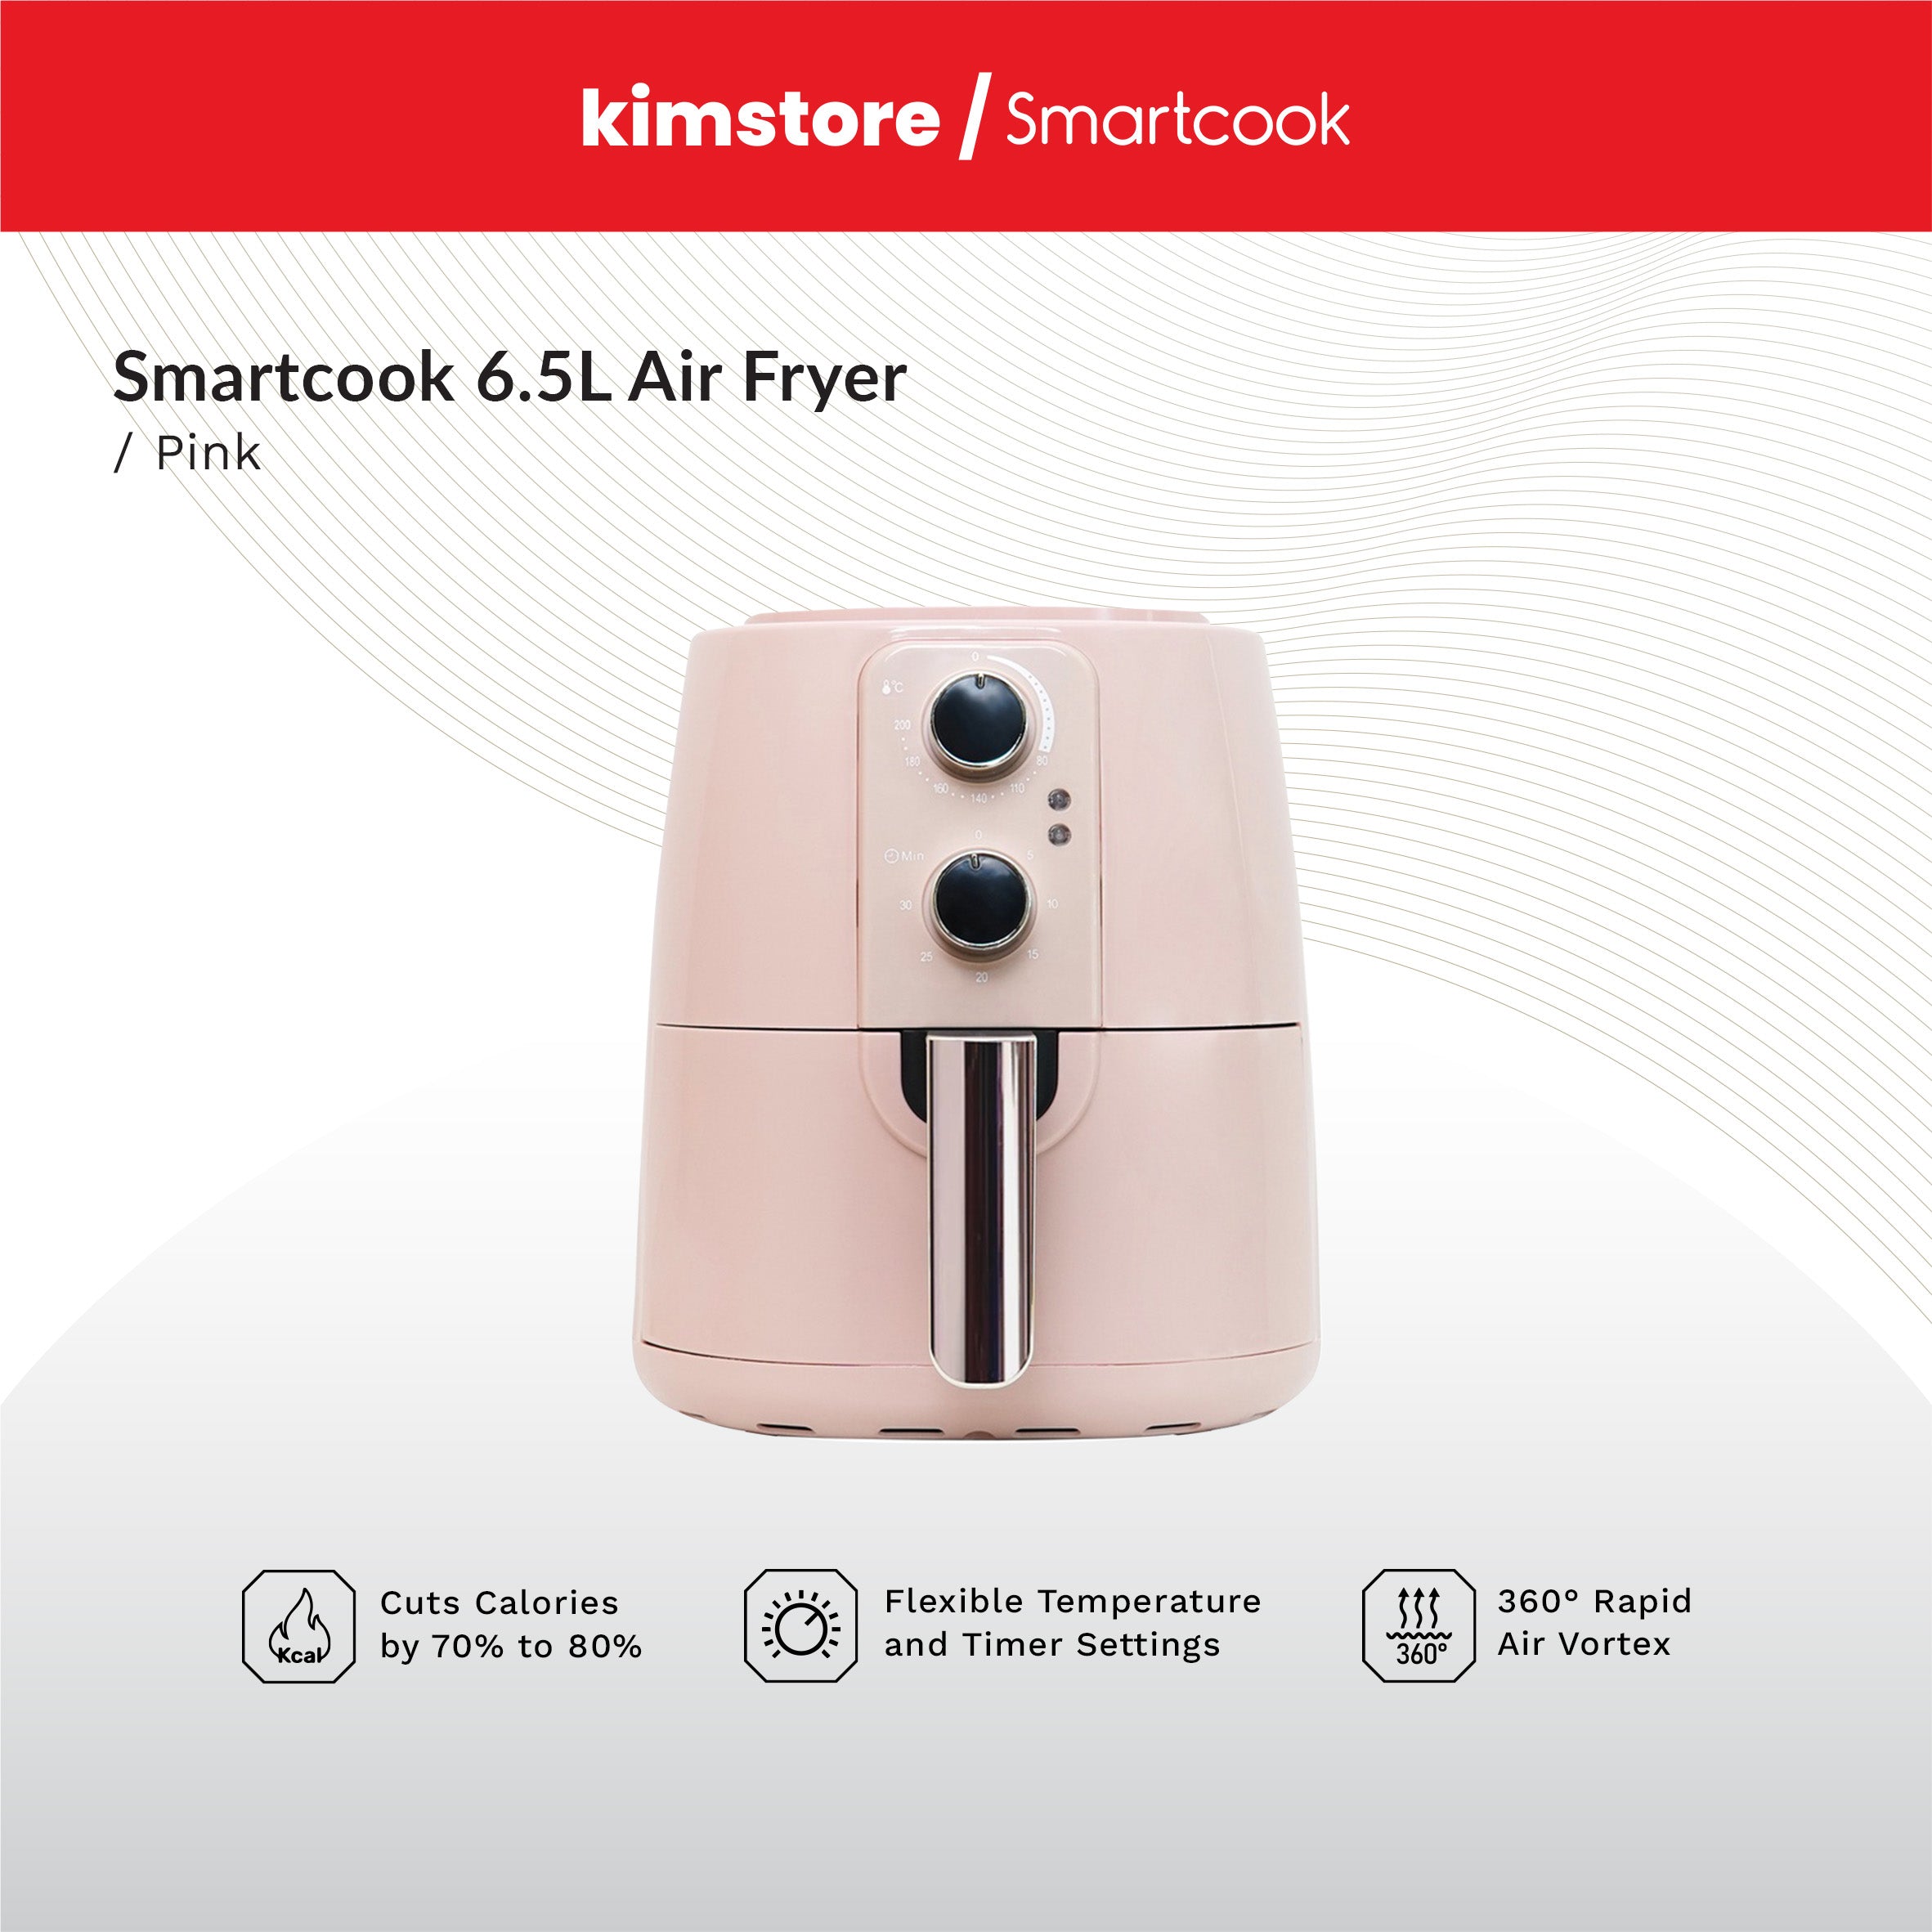 Smartcook 6.5L Air Fryer SM8451